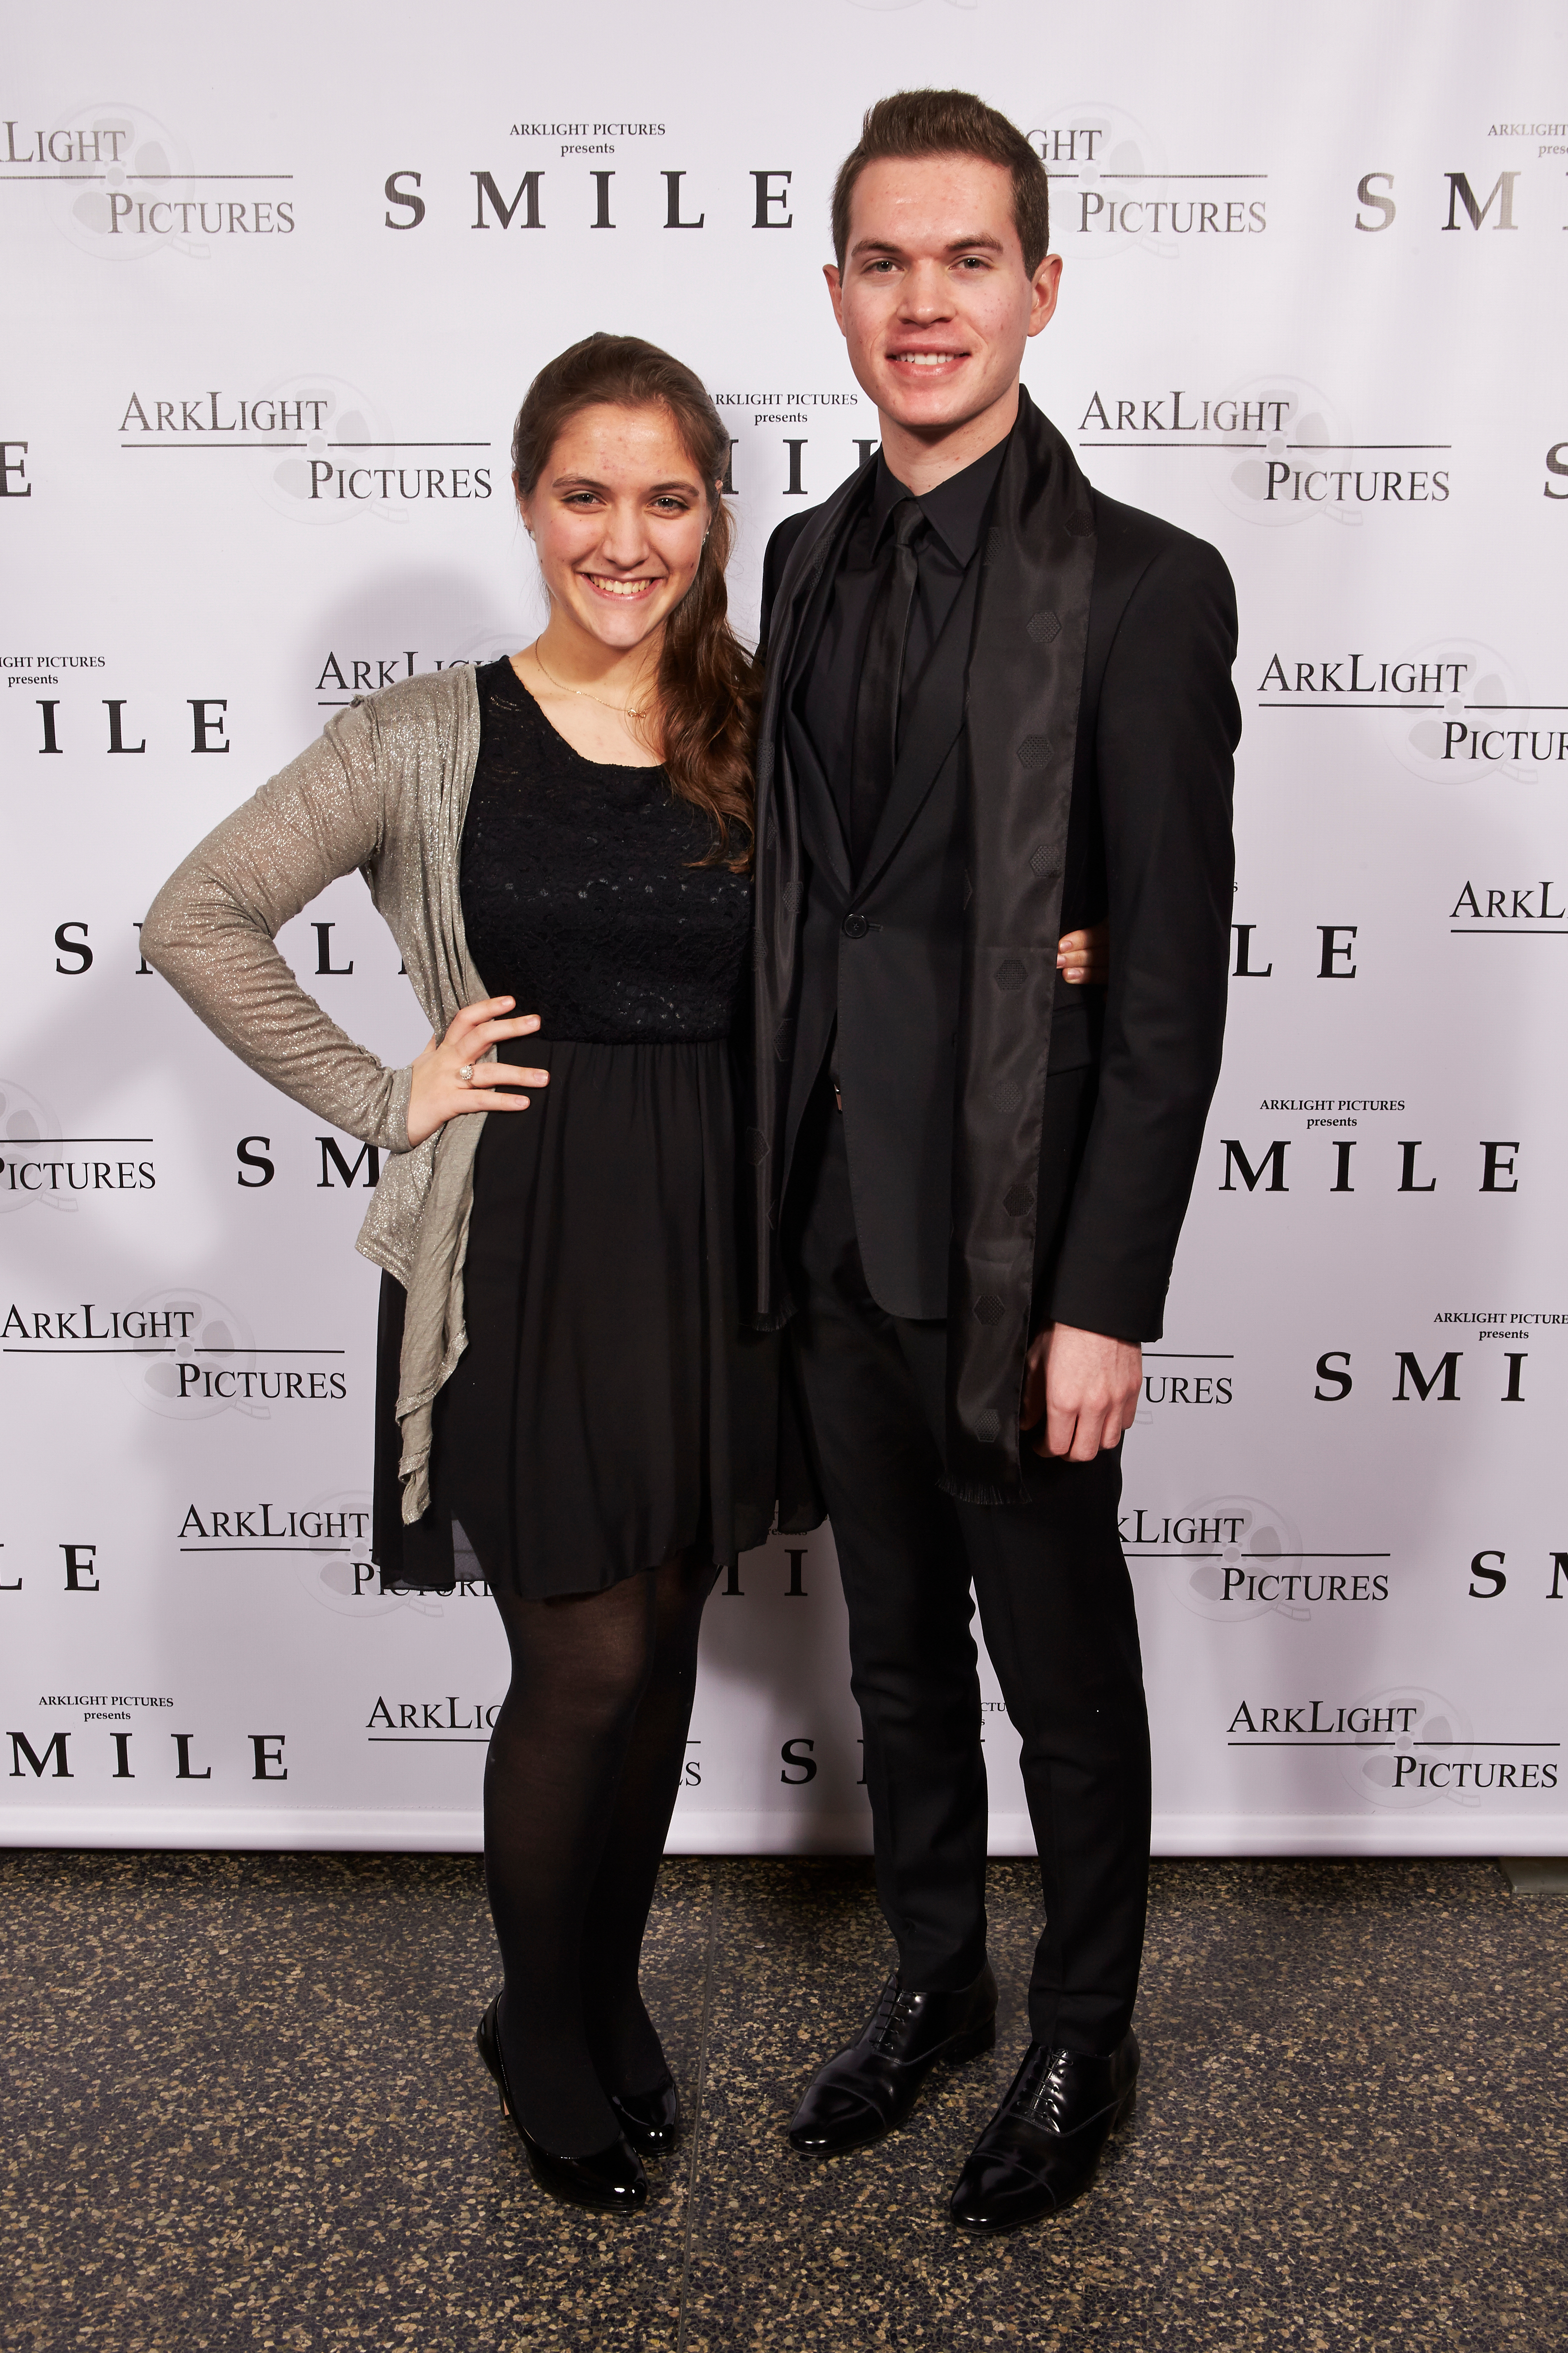 L-R: Rachel Keteyian and Aaron Keteyian at the Smile Premiere Event